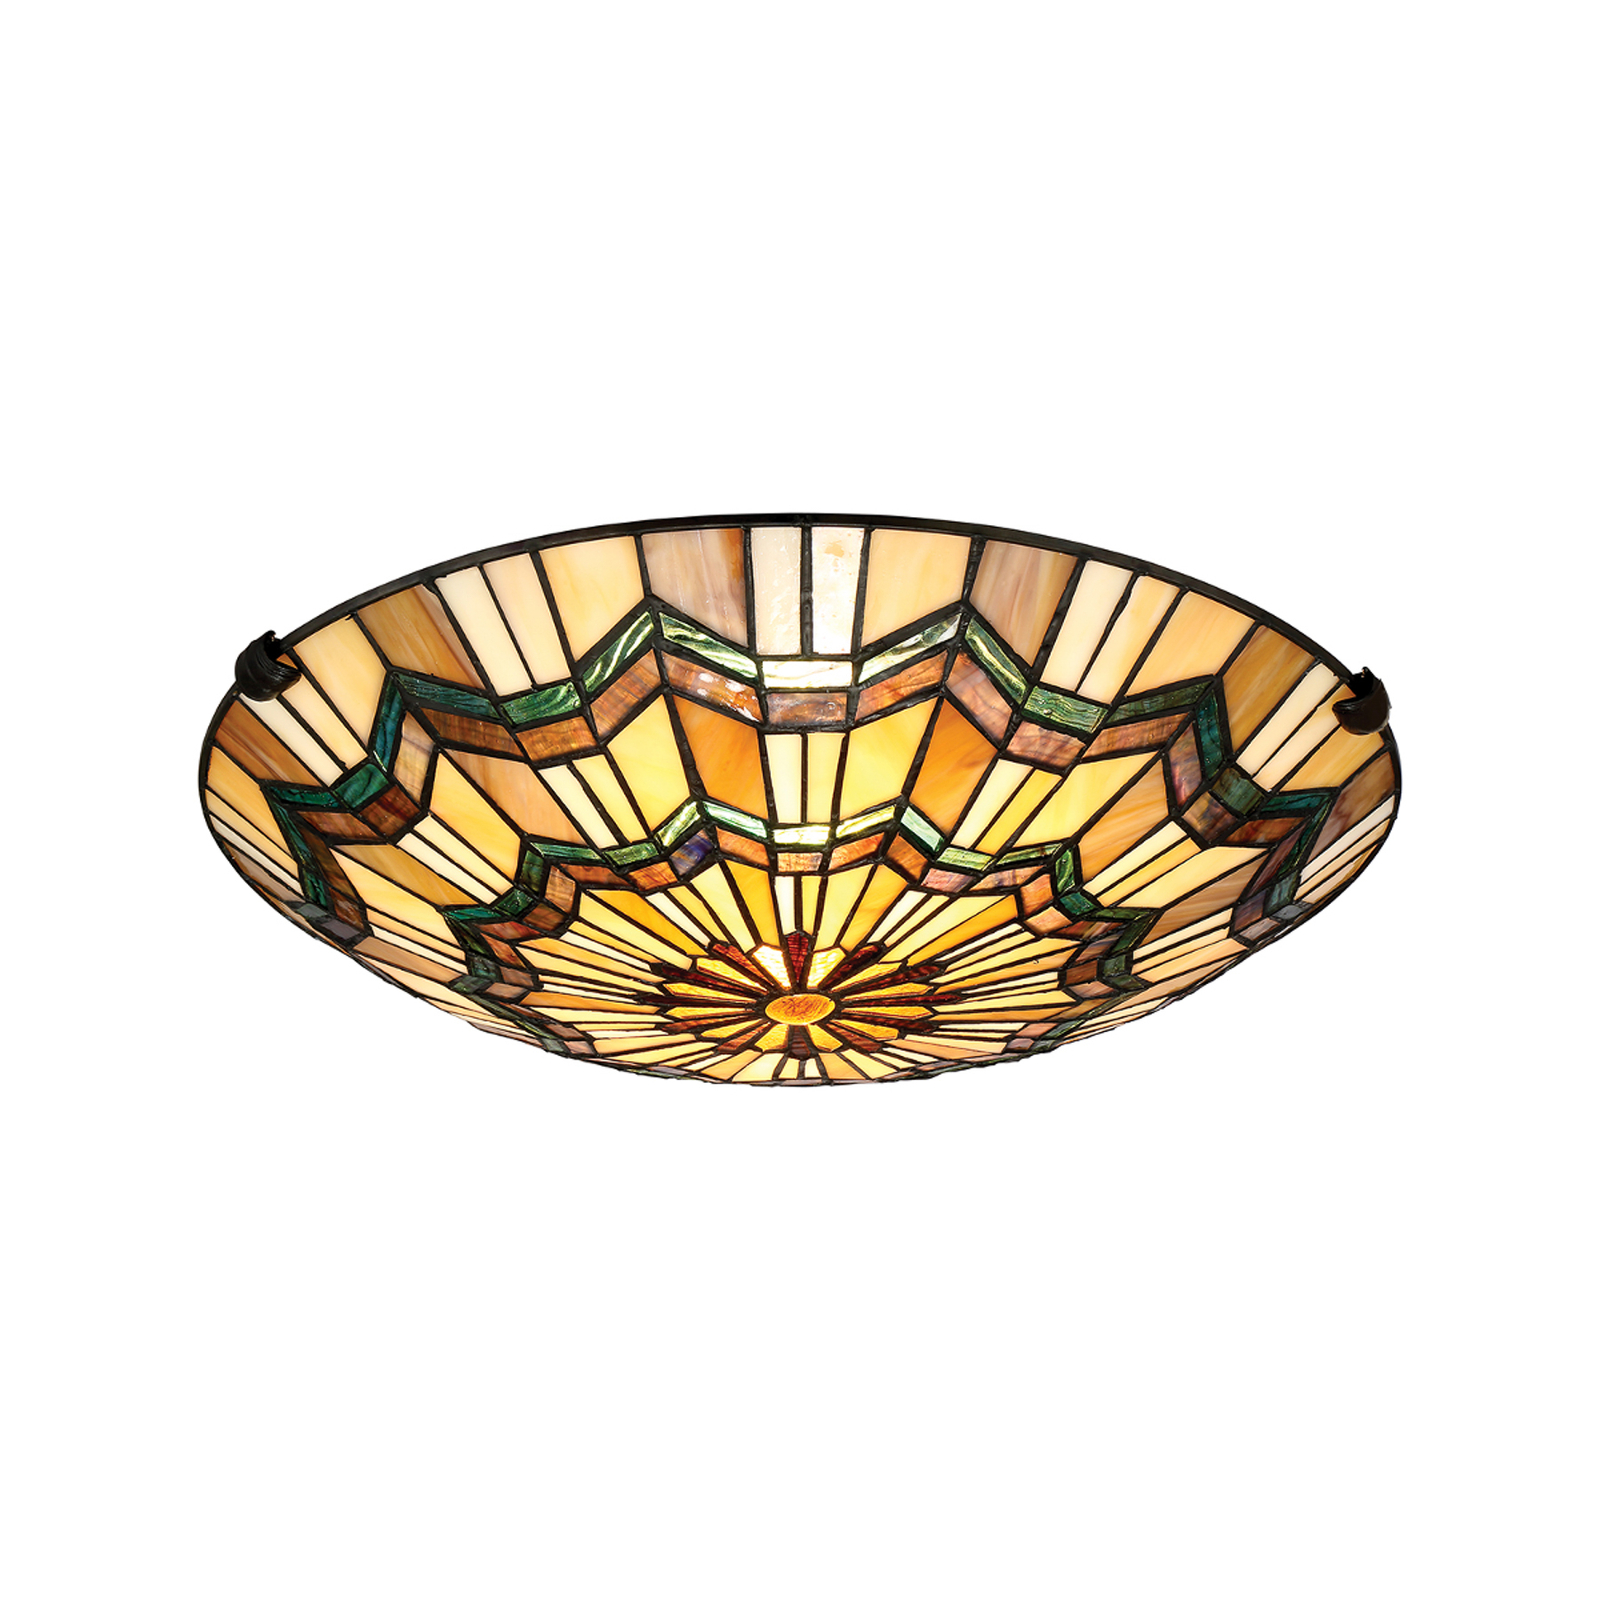 Alcott ceiling lamp in a Tiffany design